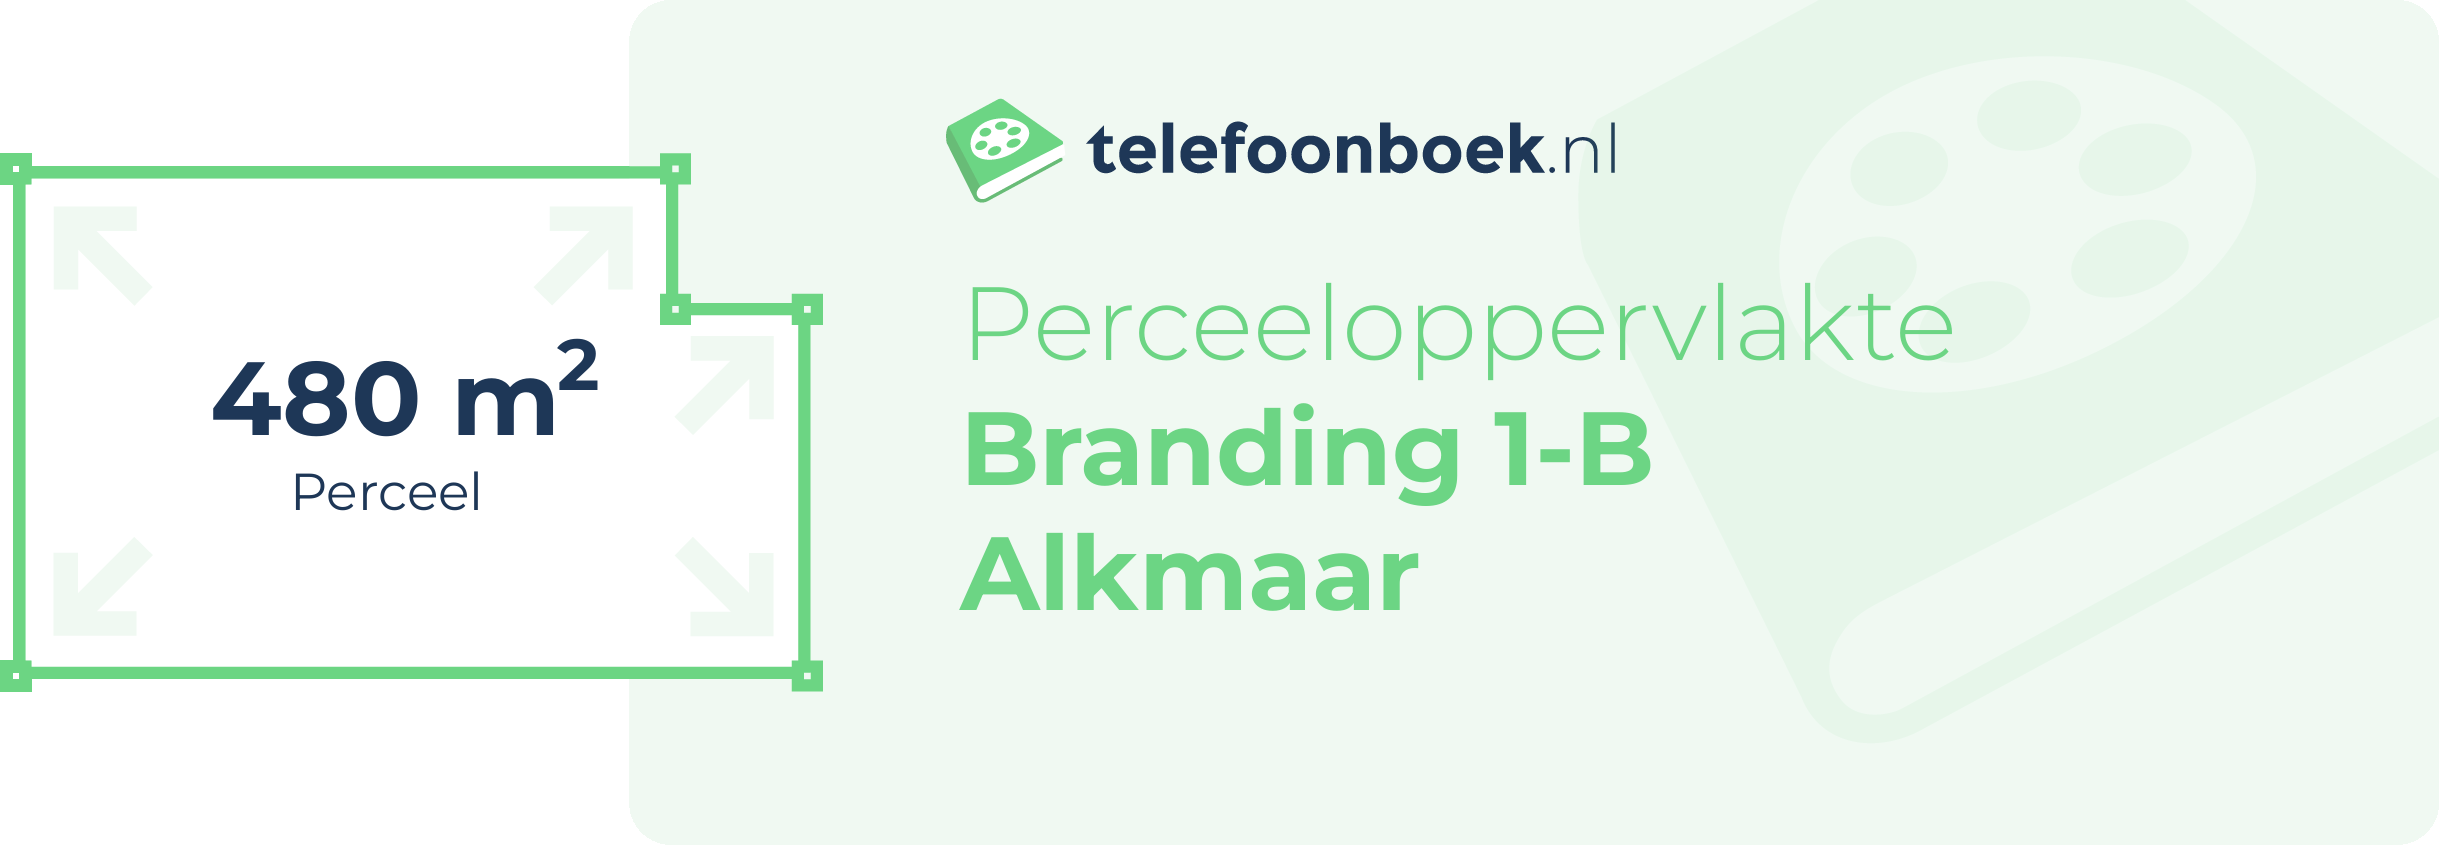 Perceeloppervlakte Branding 1-B Alkmaar